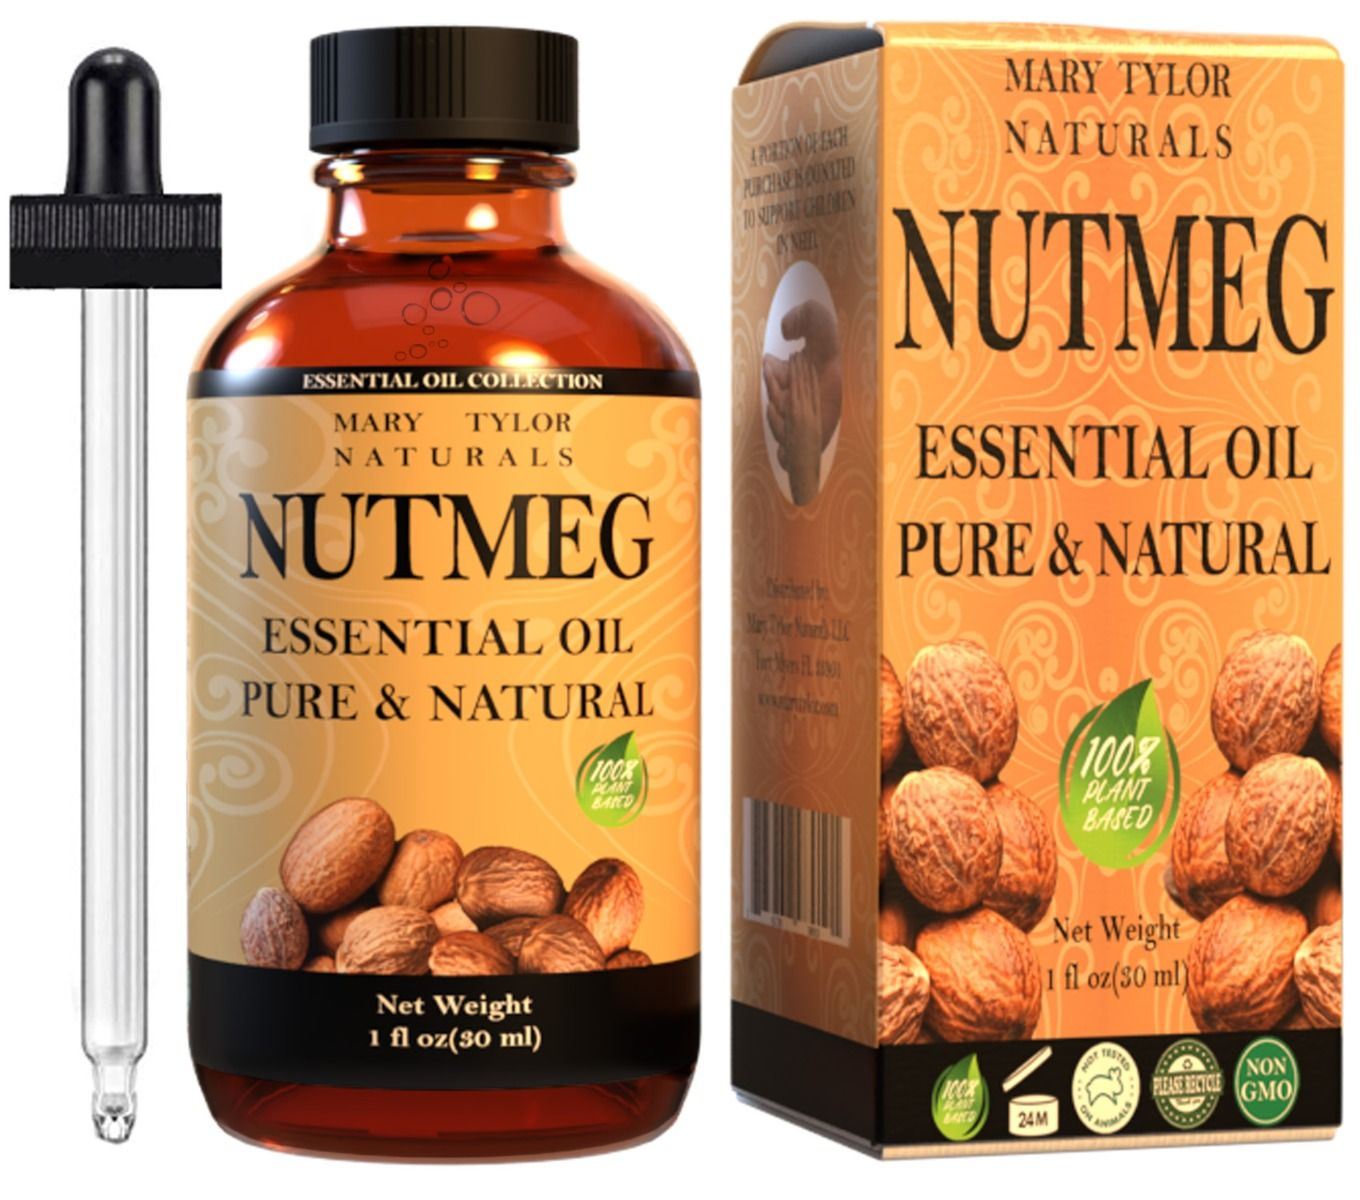 Nutmeg (Certified Organic) Essential Oil